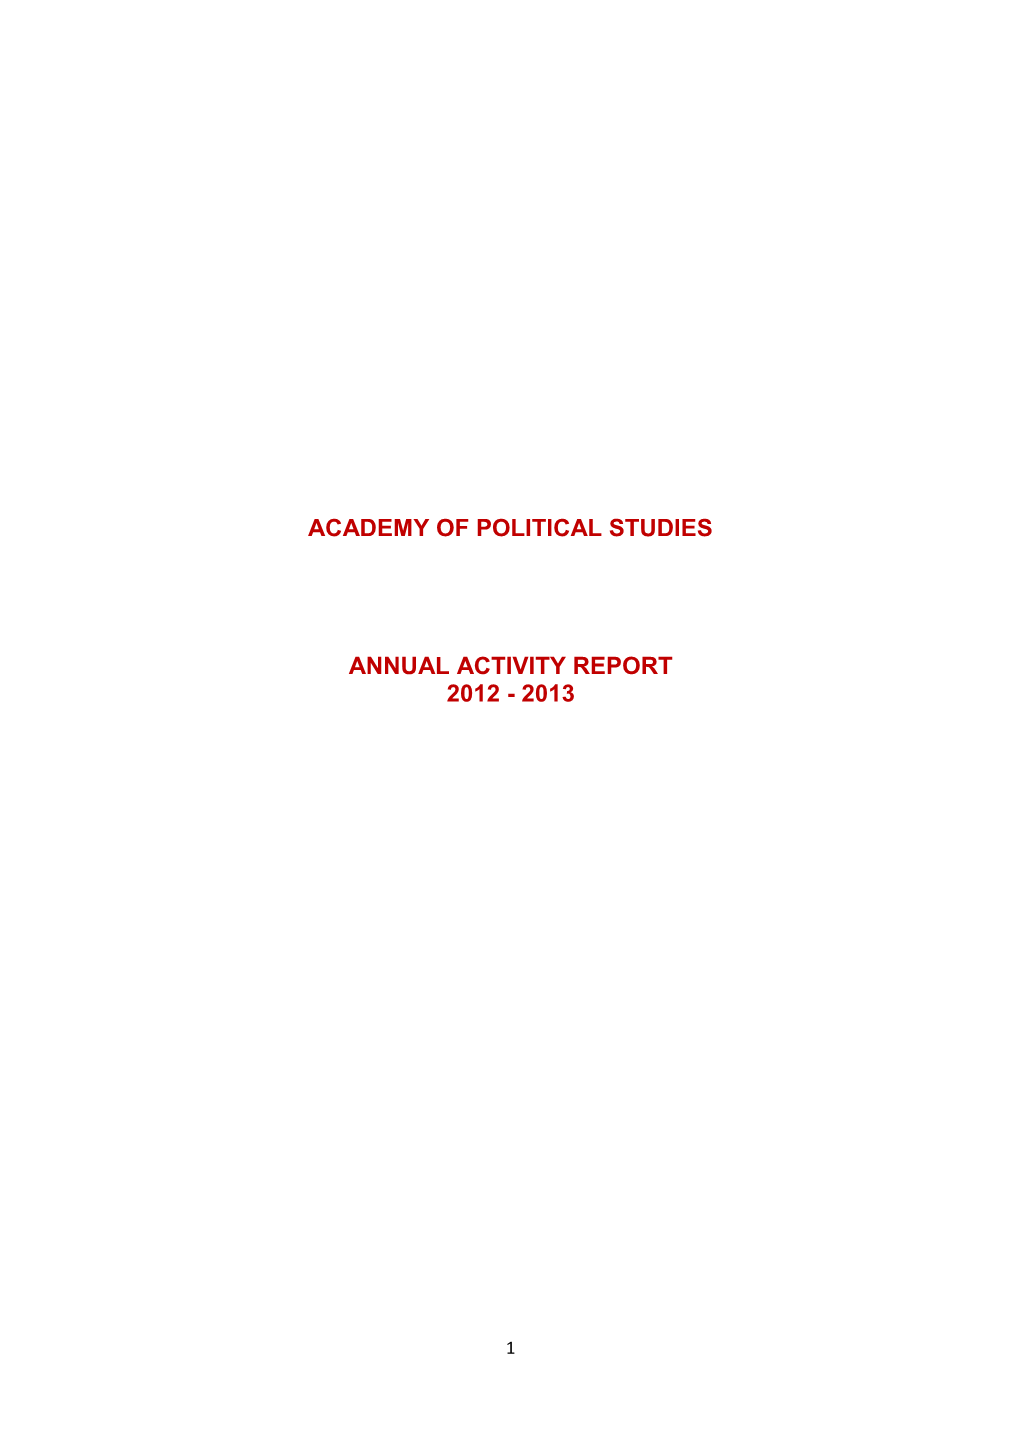 Academy of Political Studies